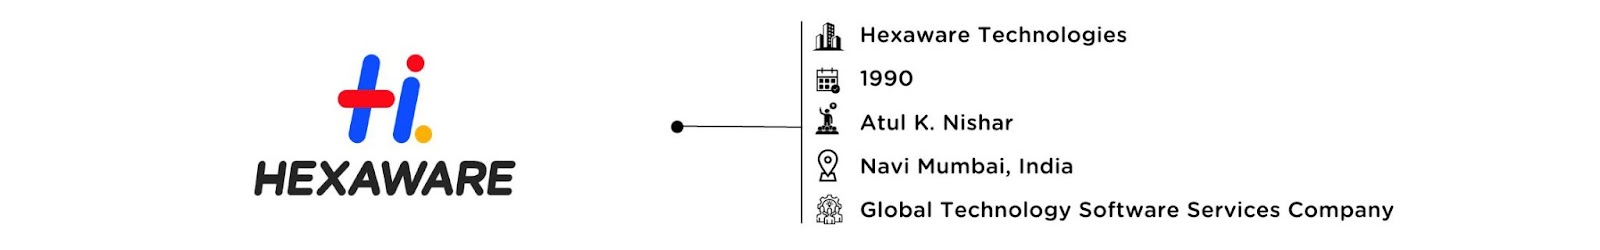 Hexaware Technologies: Software Development Company in India